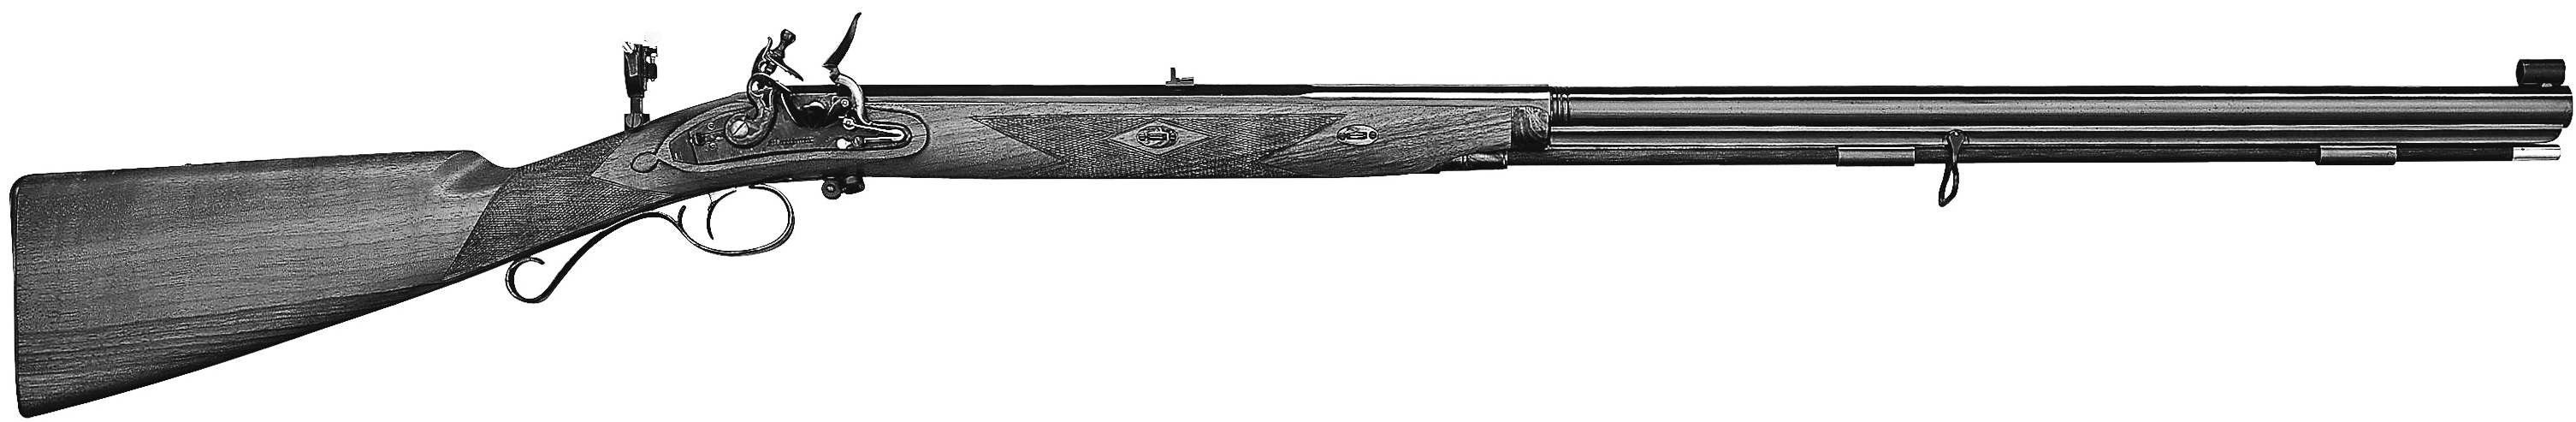 Mortimer Standard Rifle